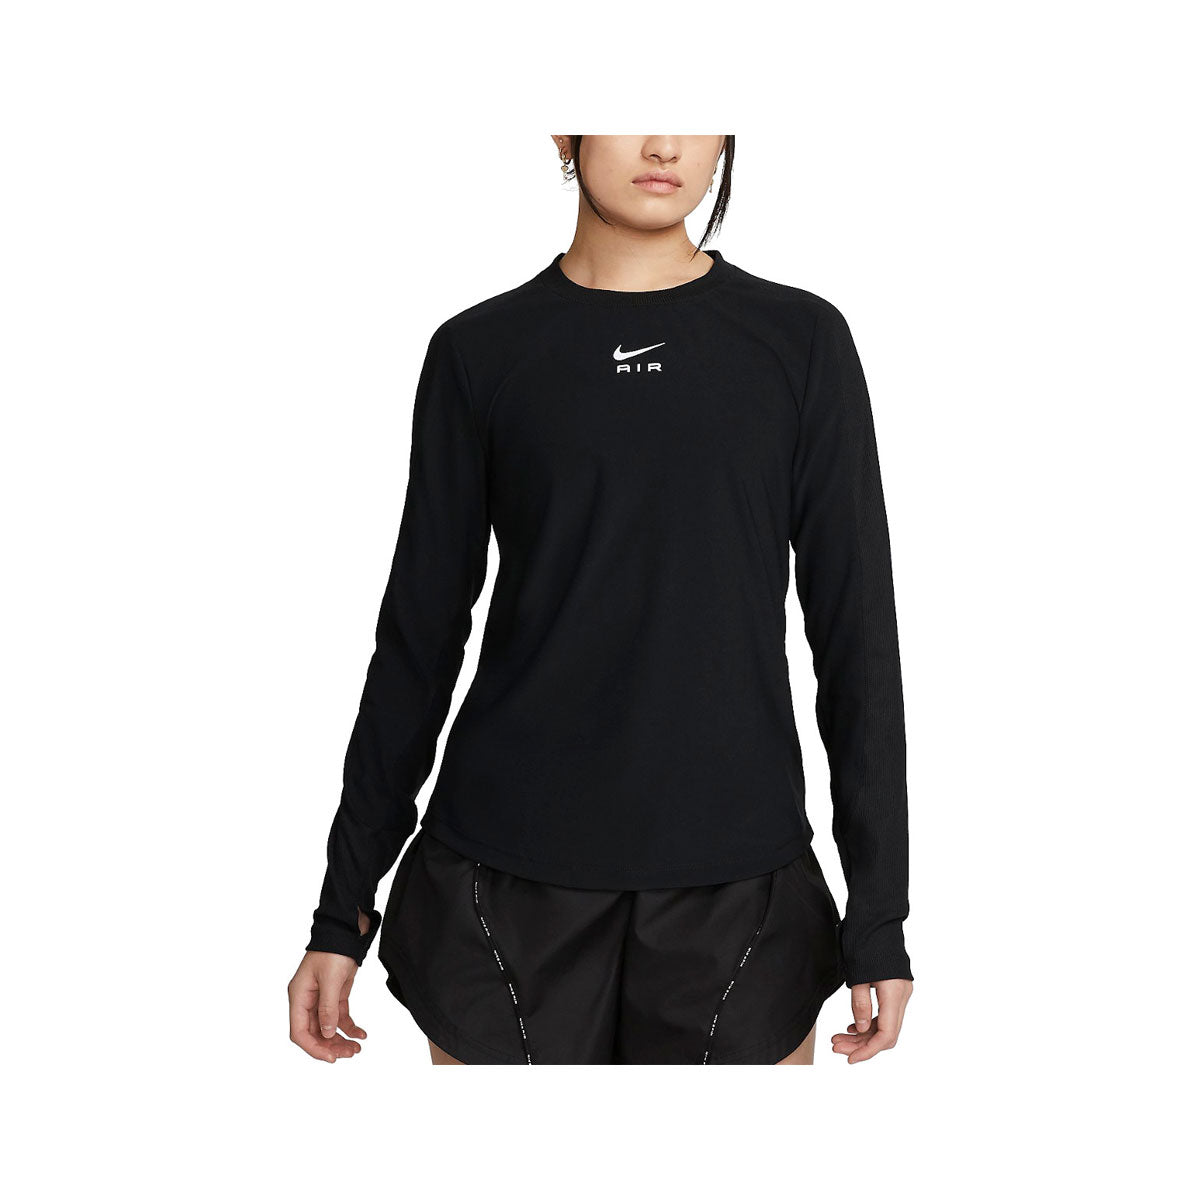 Nike Women's Air Dri-FIT Long-Sleeve Running Top